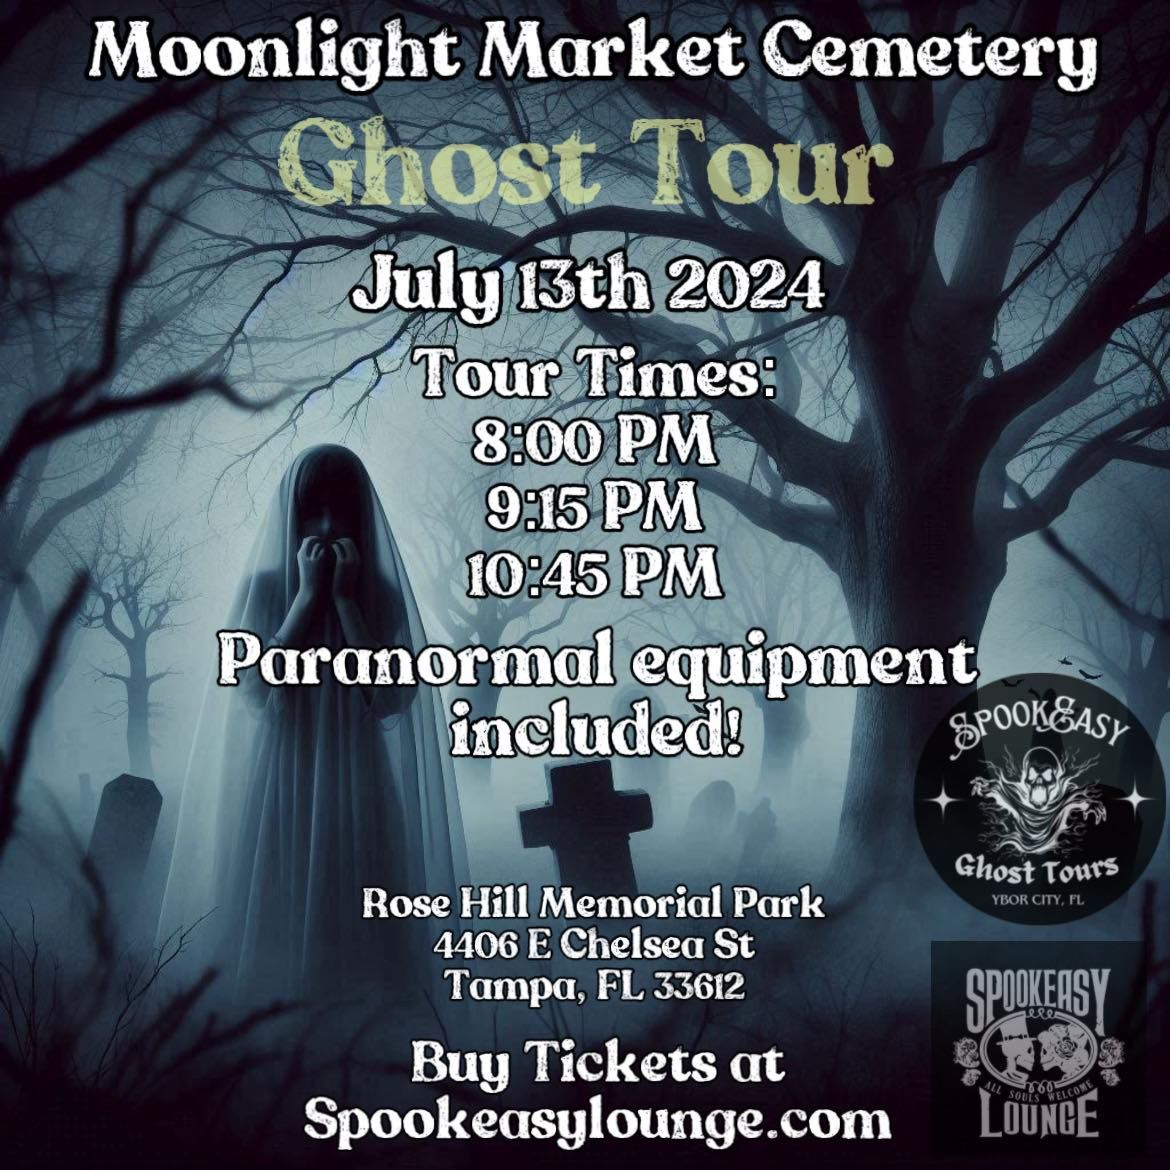 CommUnity Moonlight Market Ghost Tour